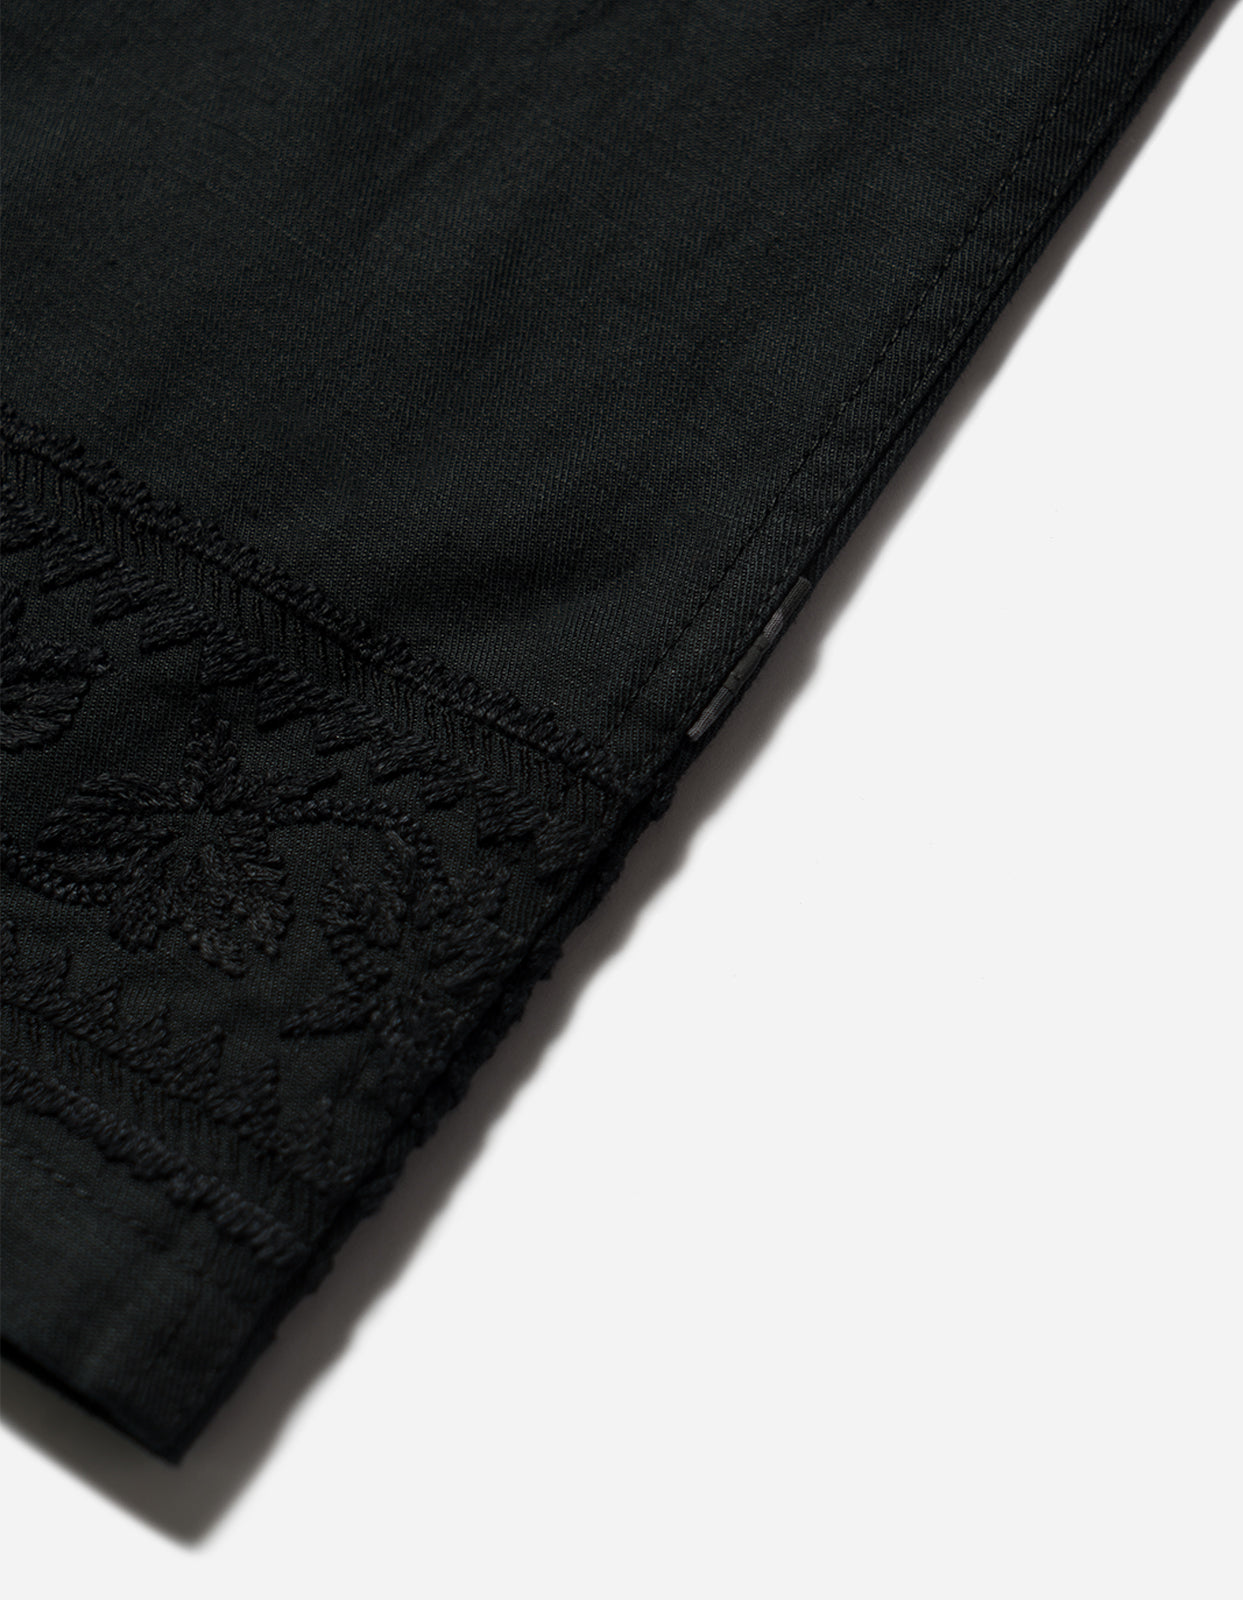 5237 Thar Dragon Utility Shirt Black